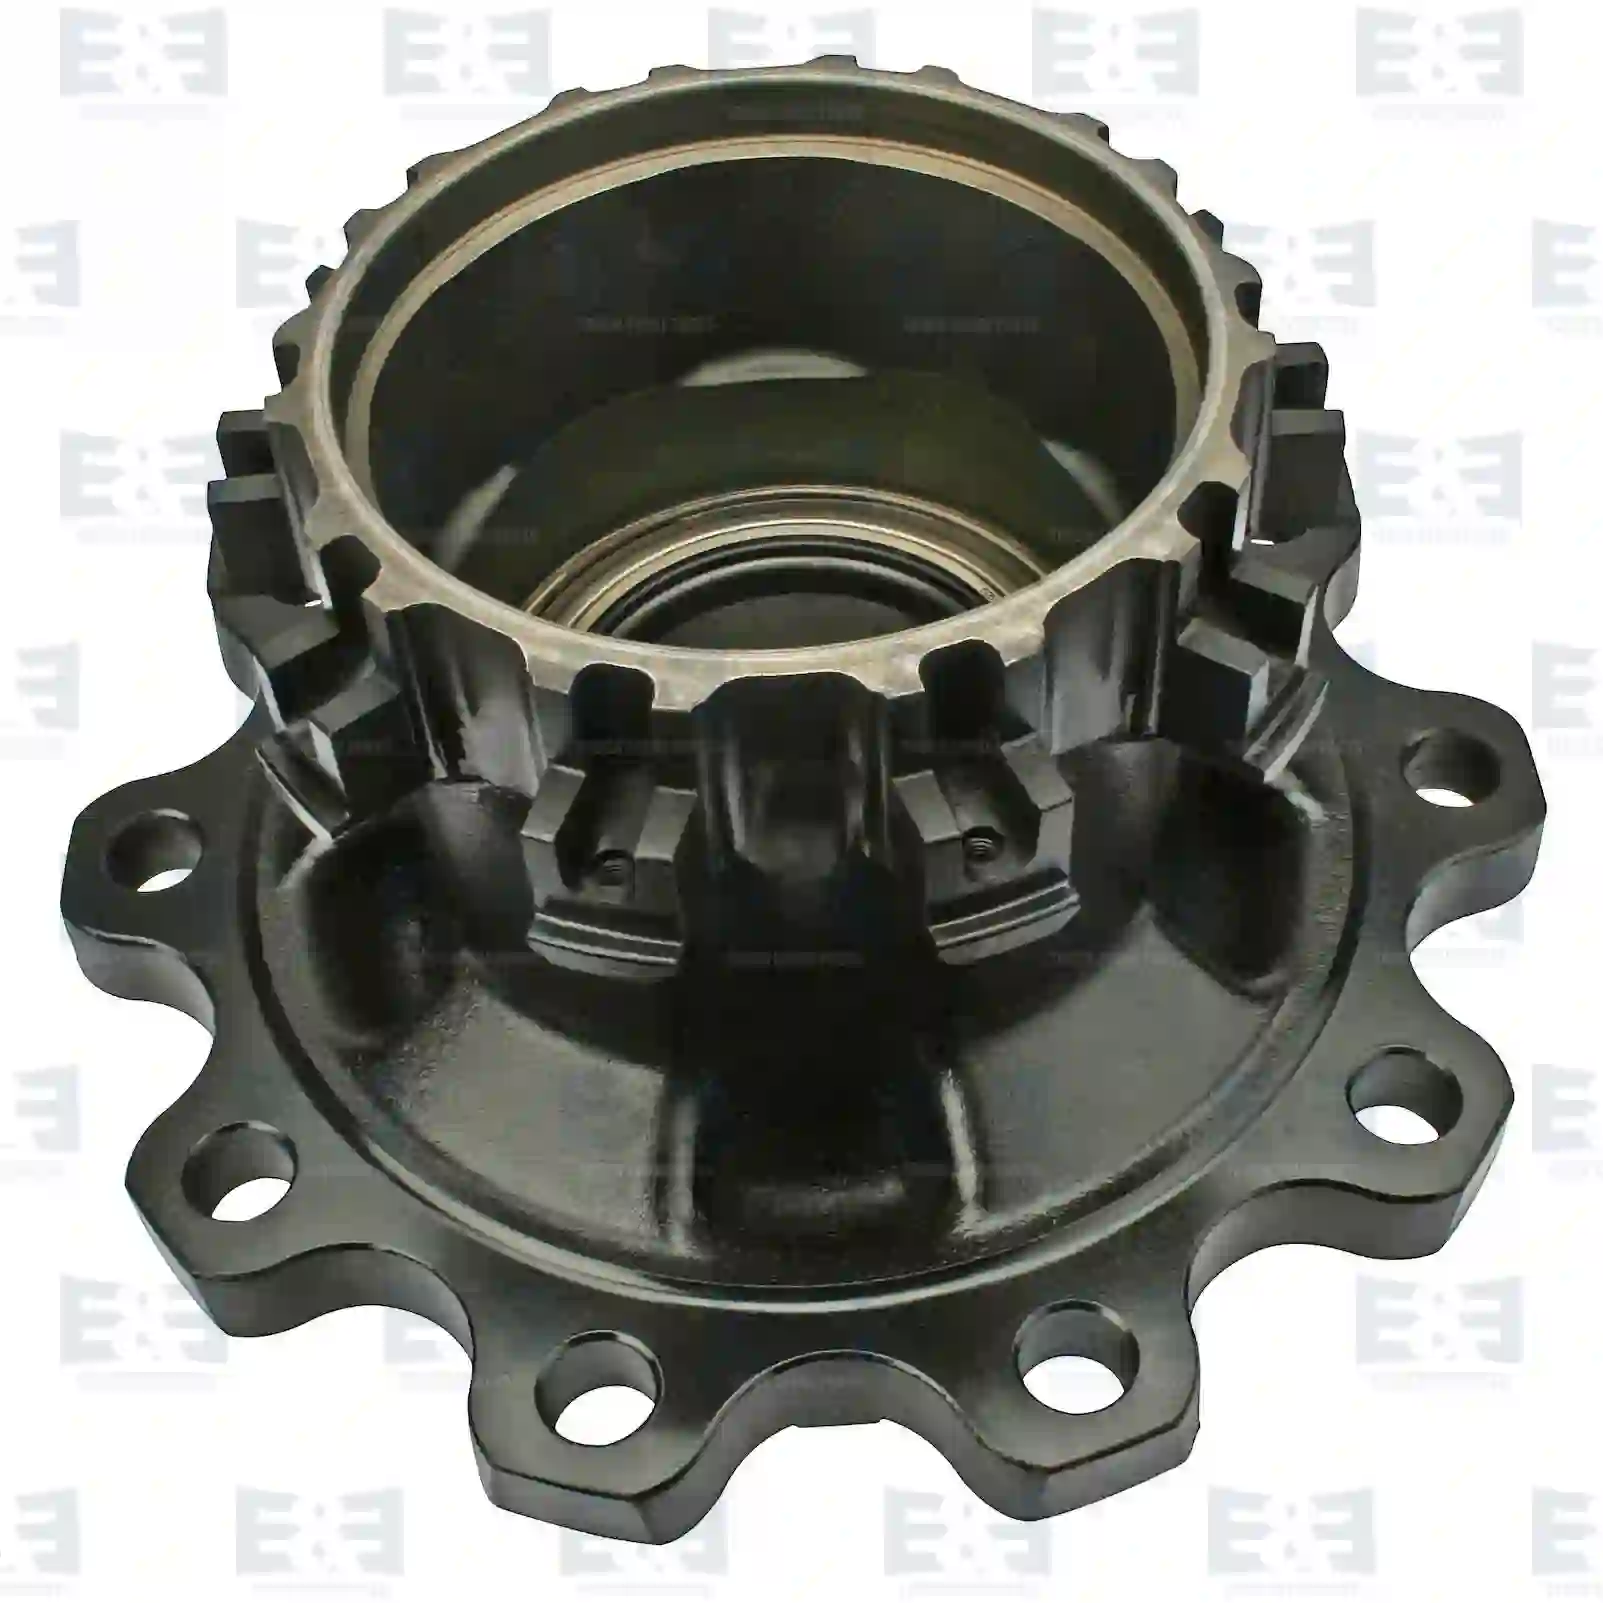  Wheel hub, without bearings || E&E Truck Spare Parts | Truck Spare Parts, Auotomotive Spare Parts